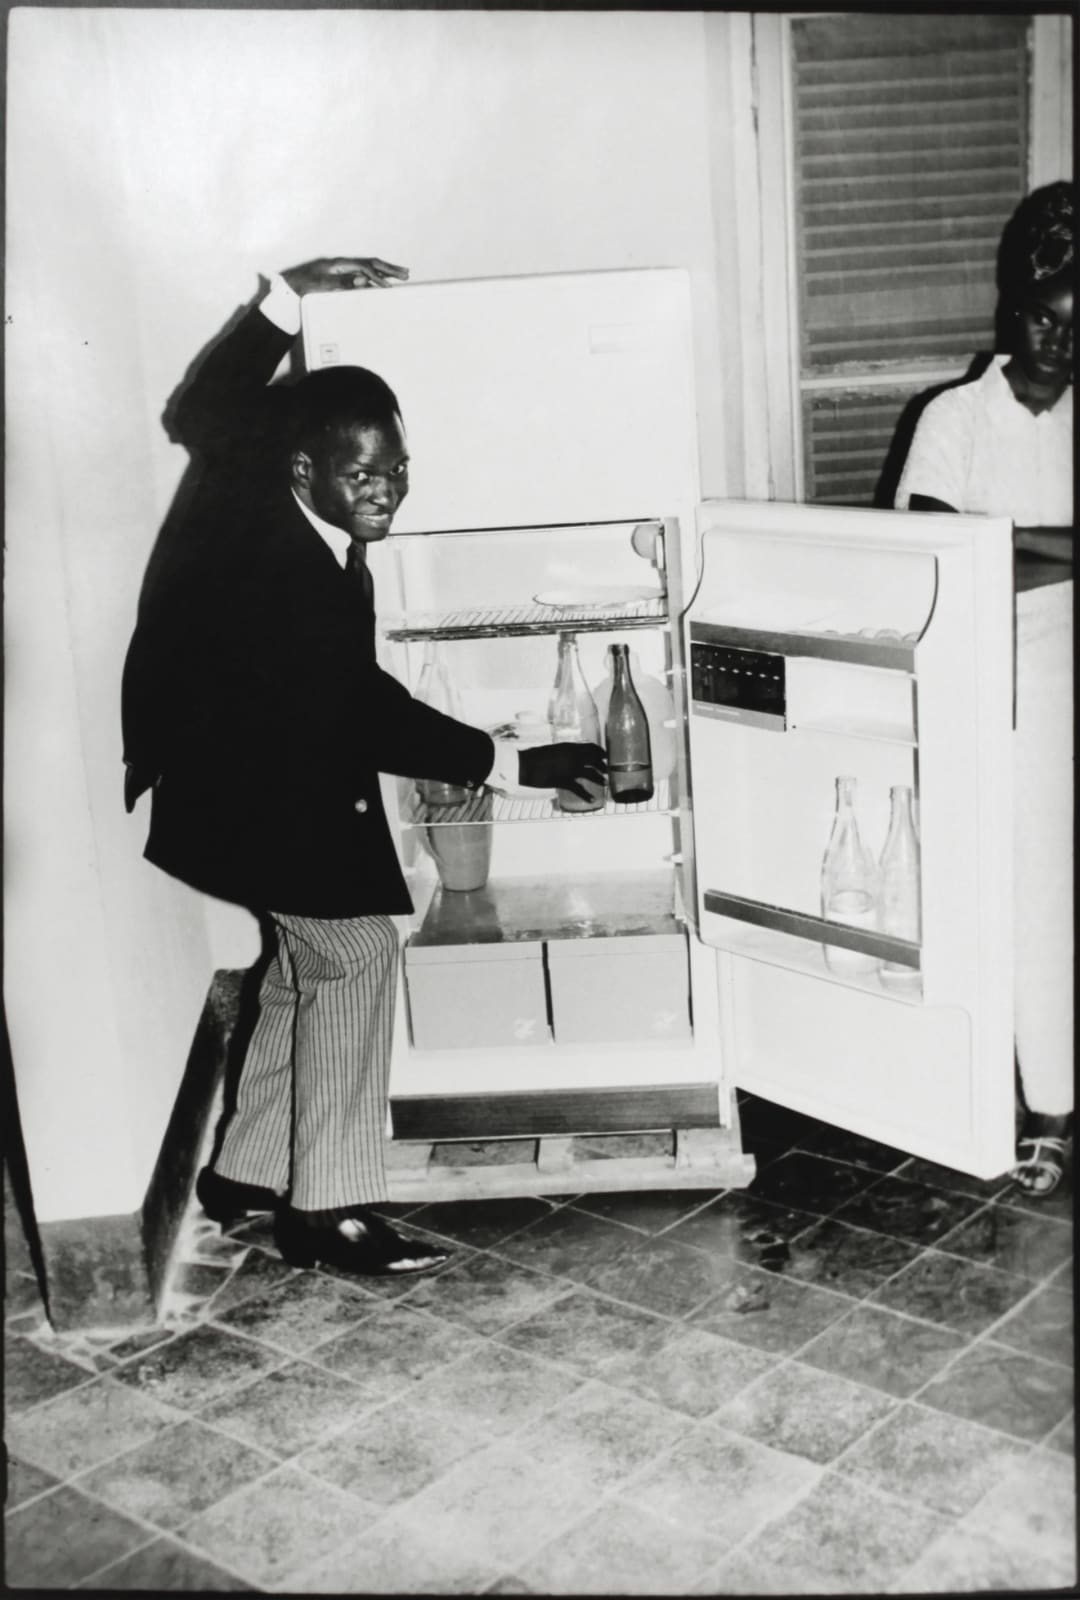 Malick Sidibe, Me Alone at the Fridge, 1968